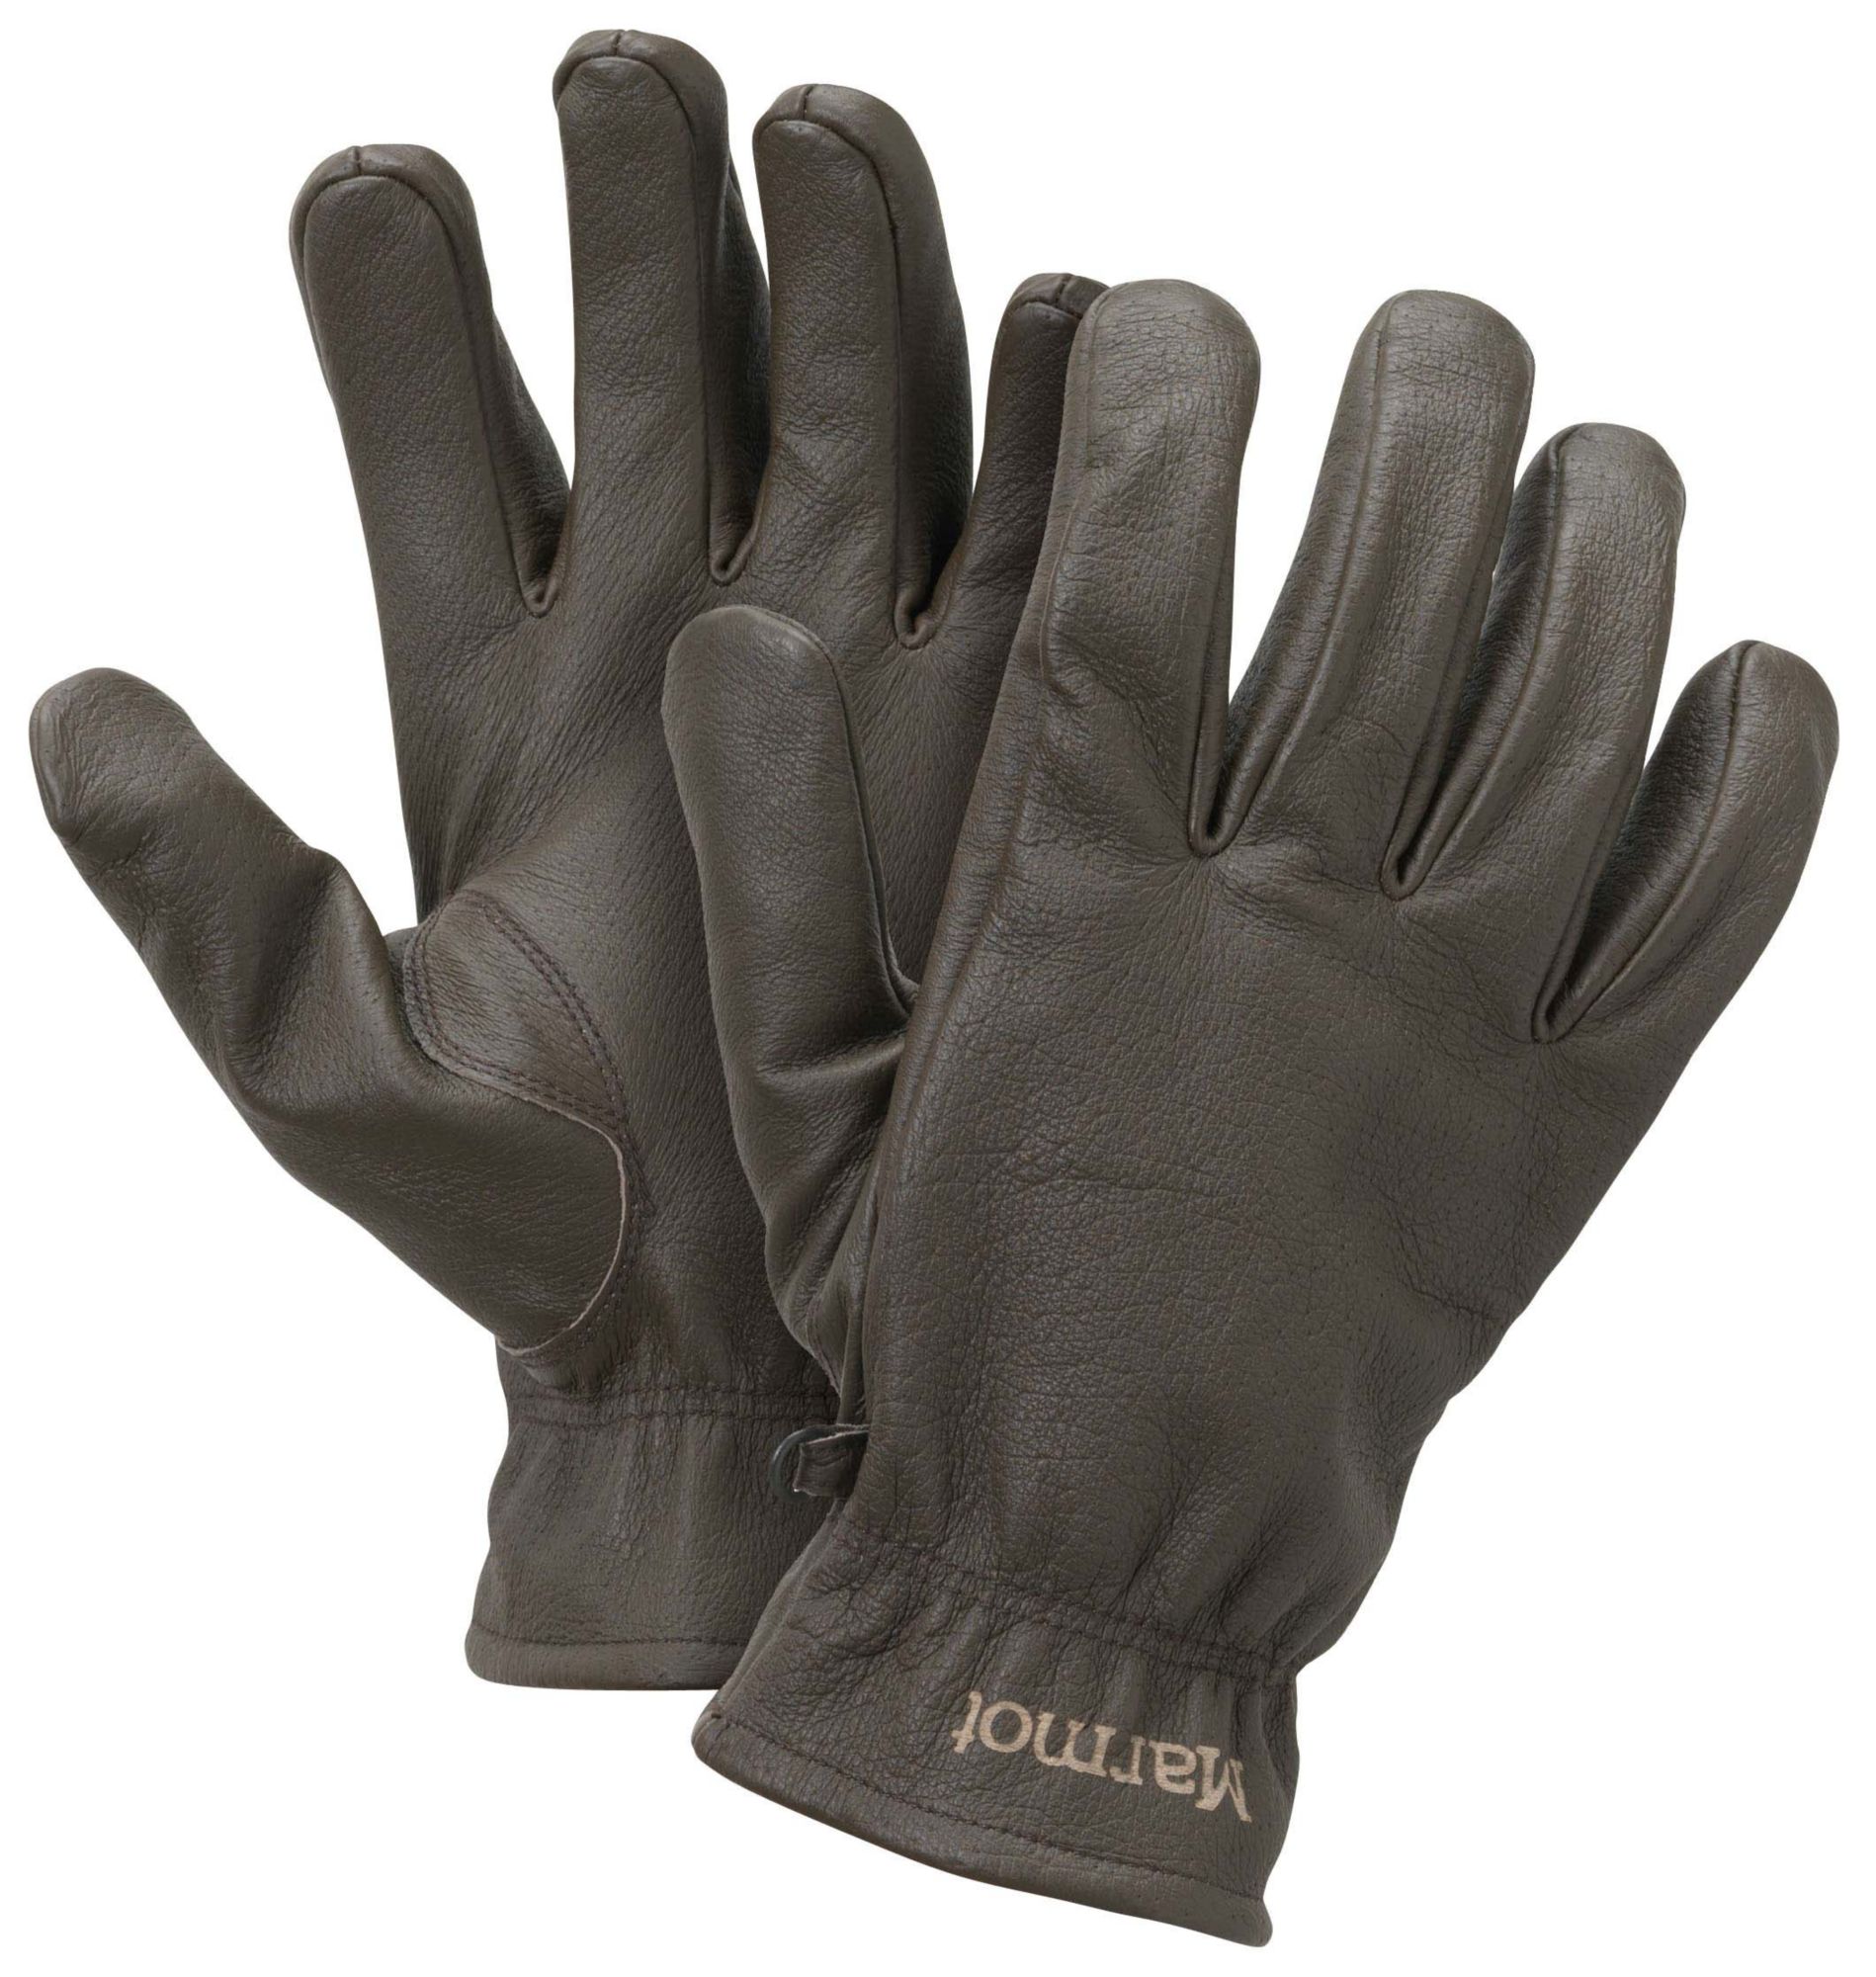 Unisex Basic Work Gloves